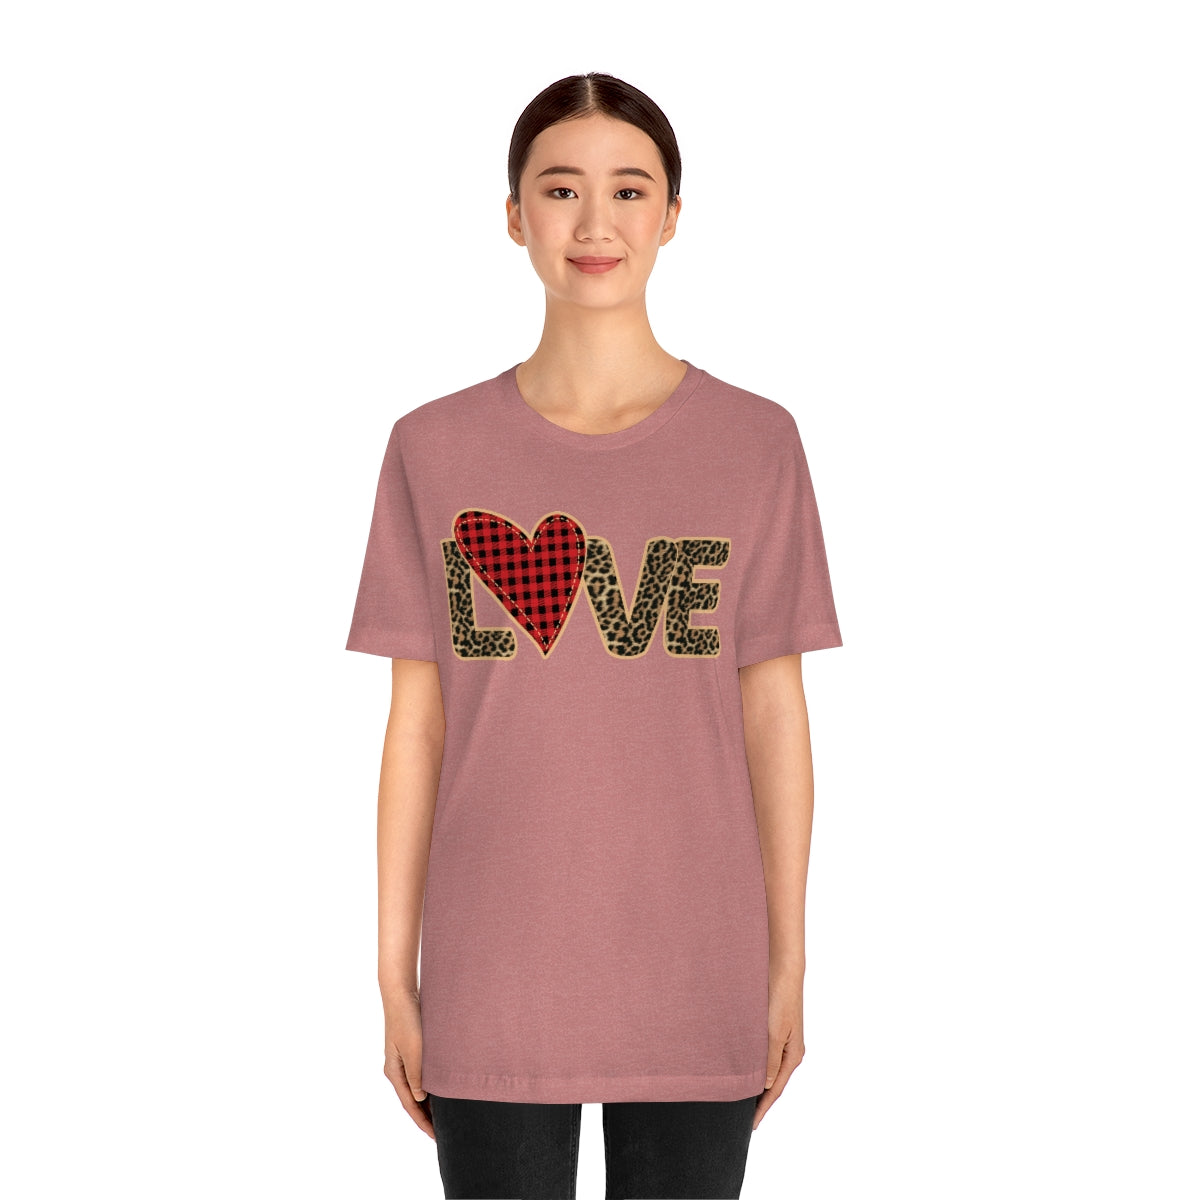 Love Leopard Shirt Graphic Tee